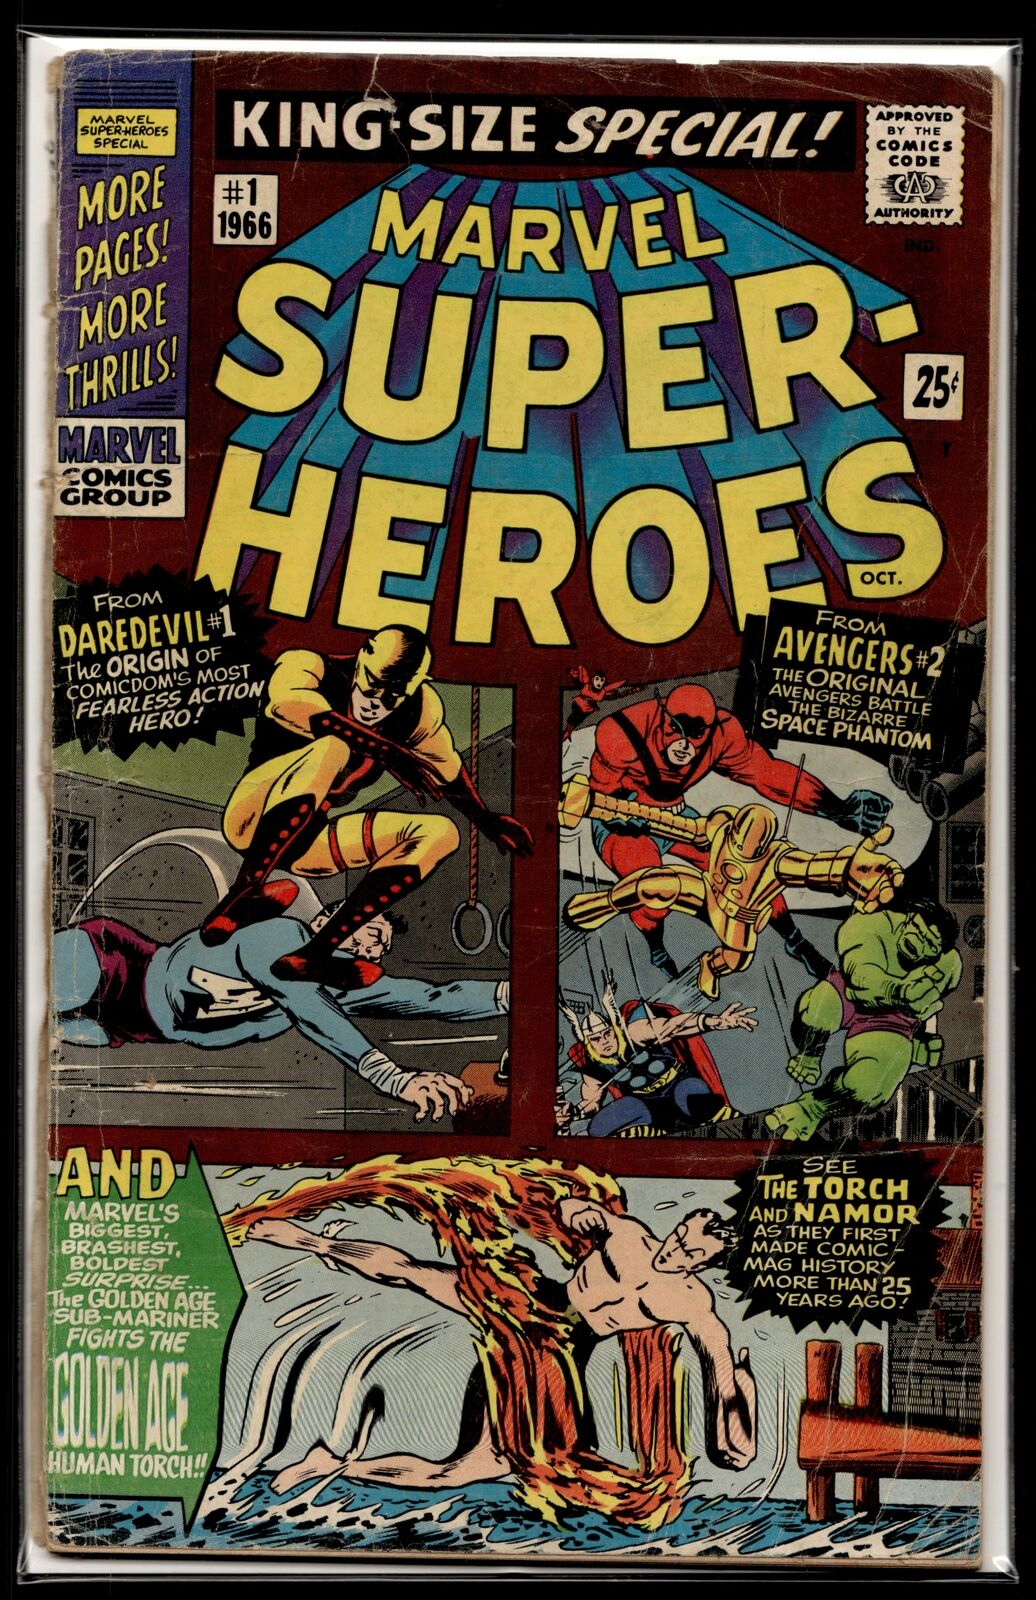 1966 Marvel Super-Heroes #1 King Size Special Marvel Comic